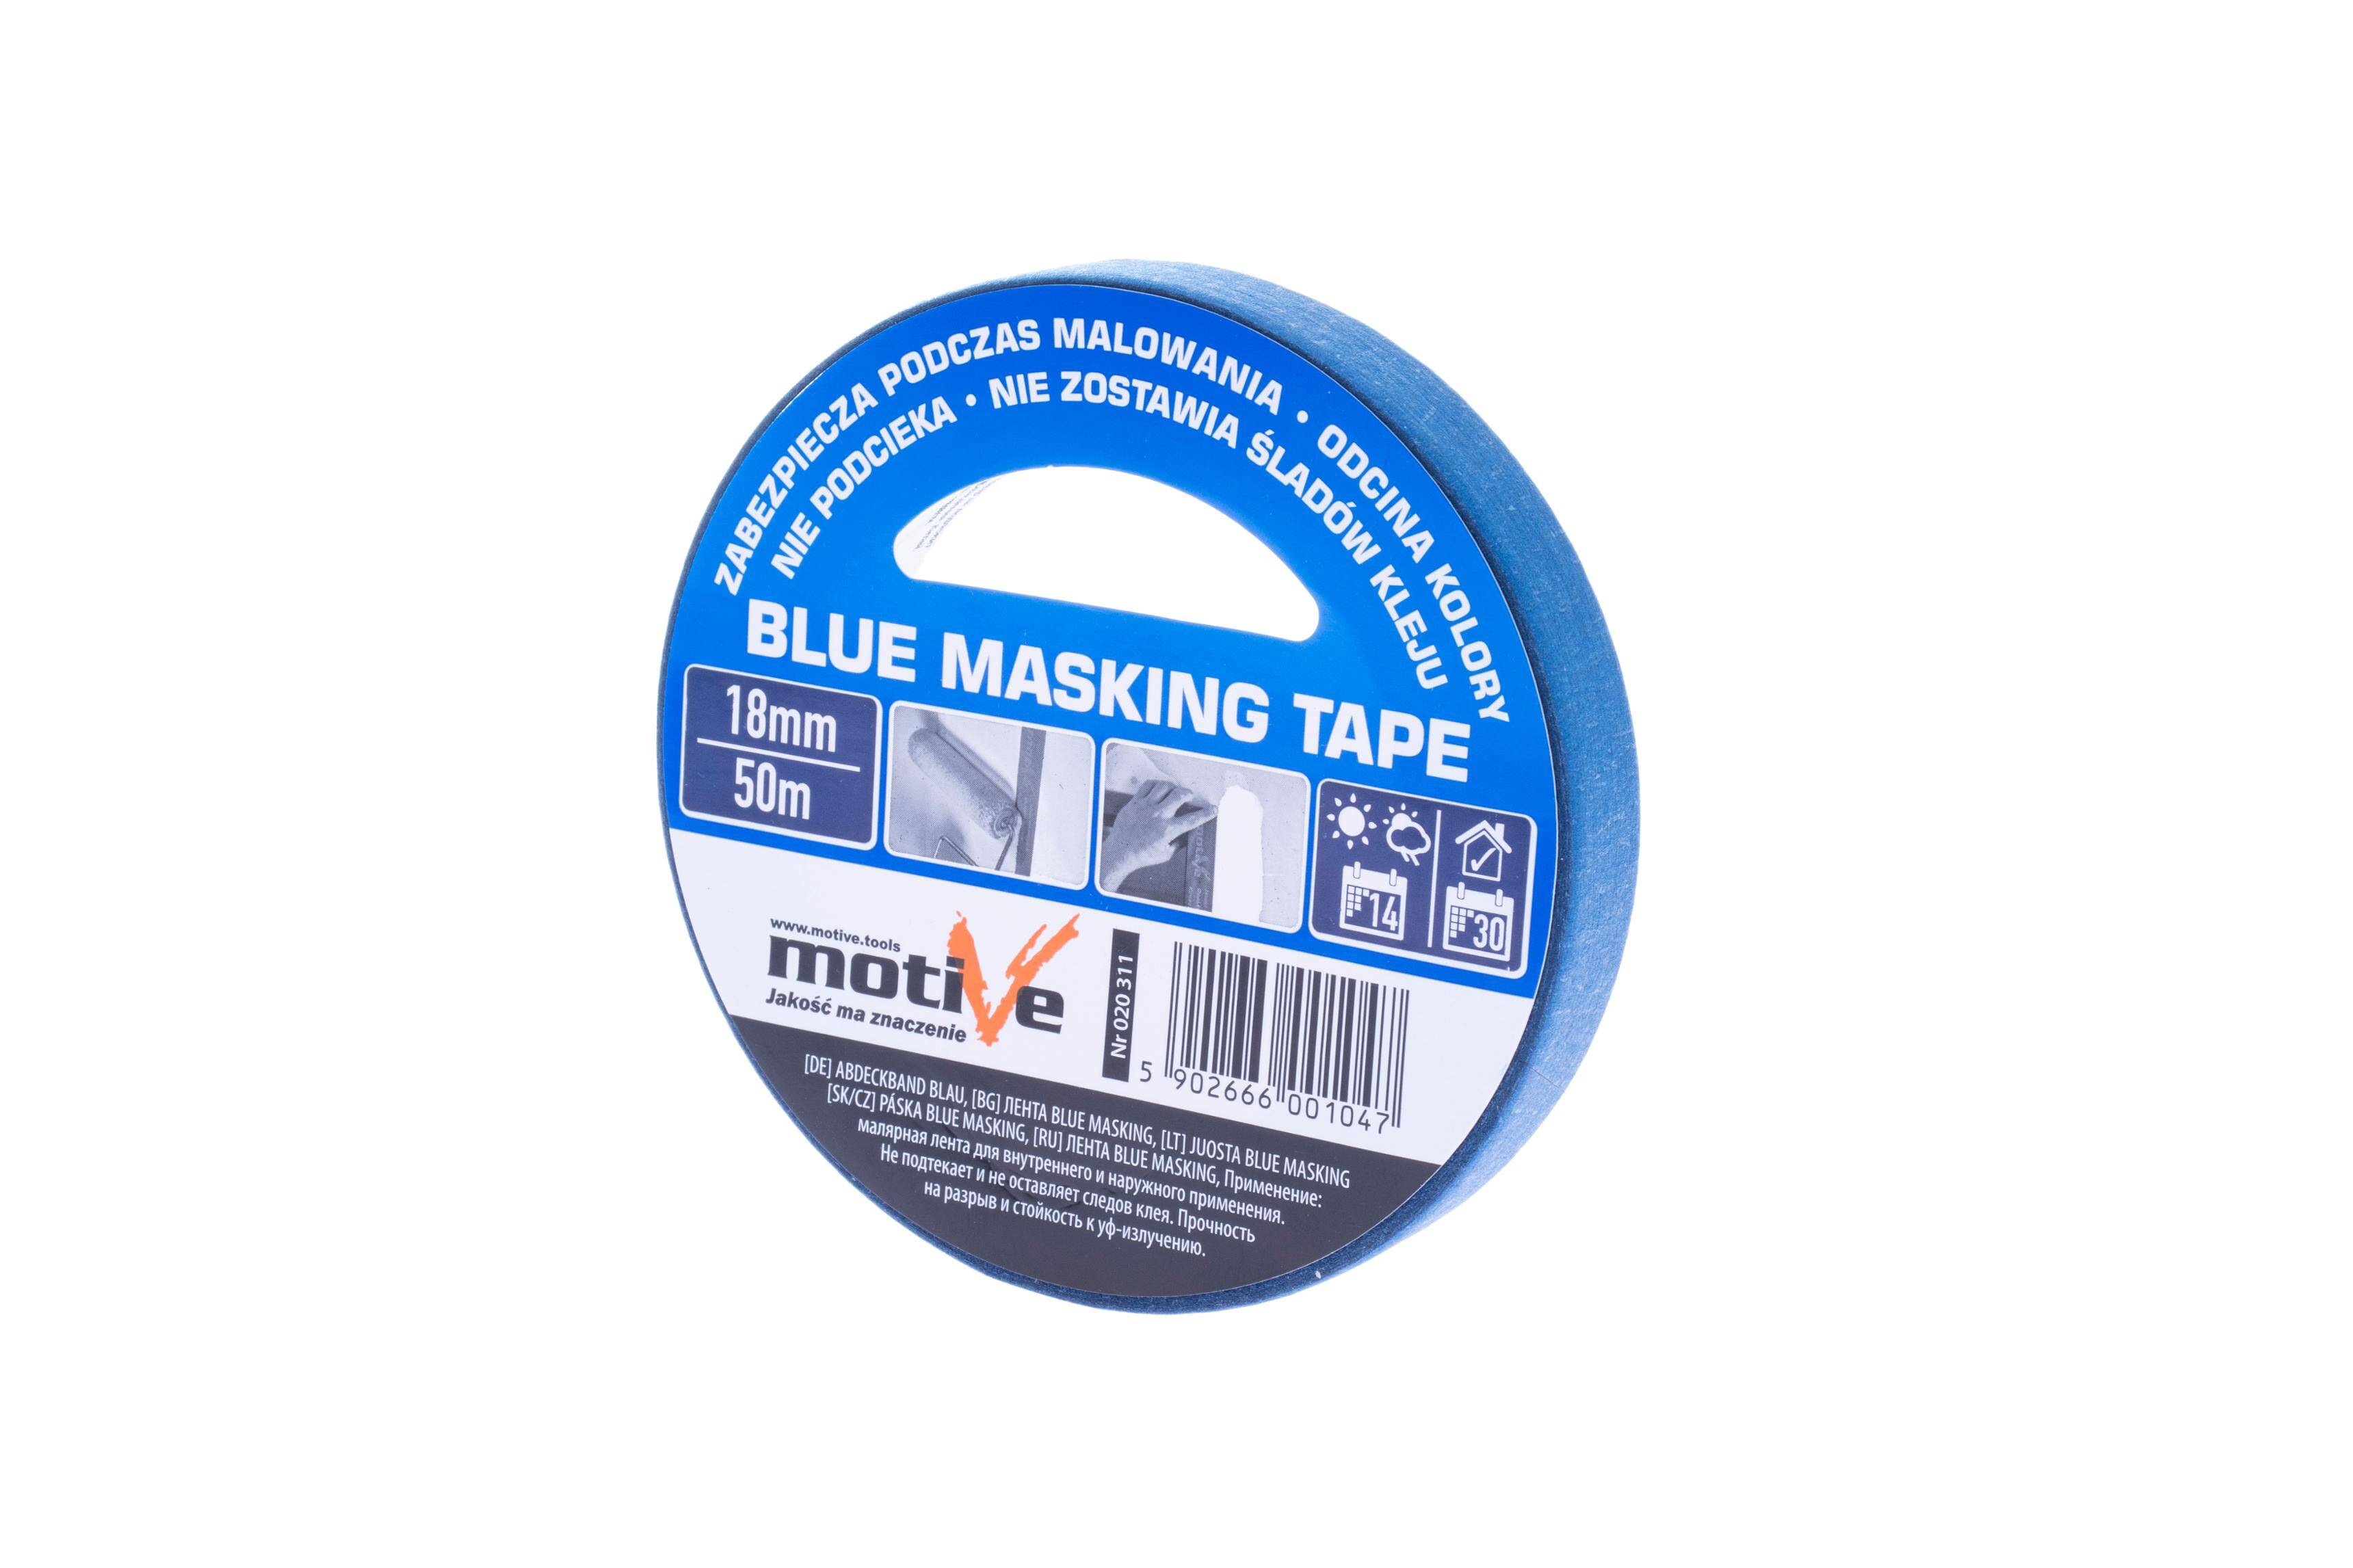 Blue masking tape 18mm/50m 